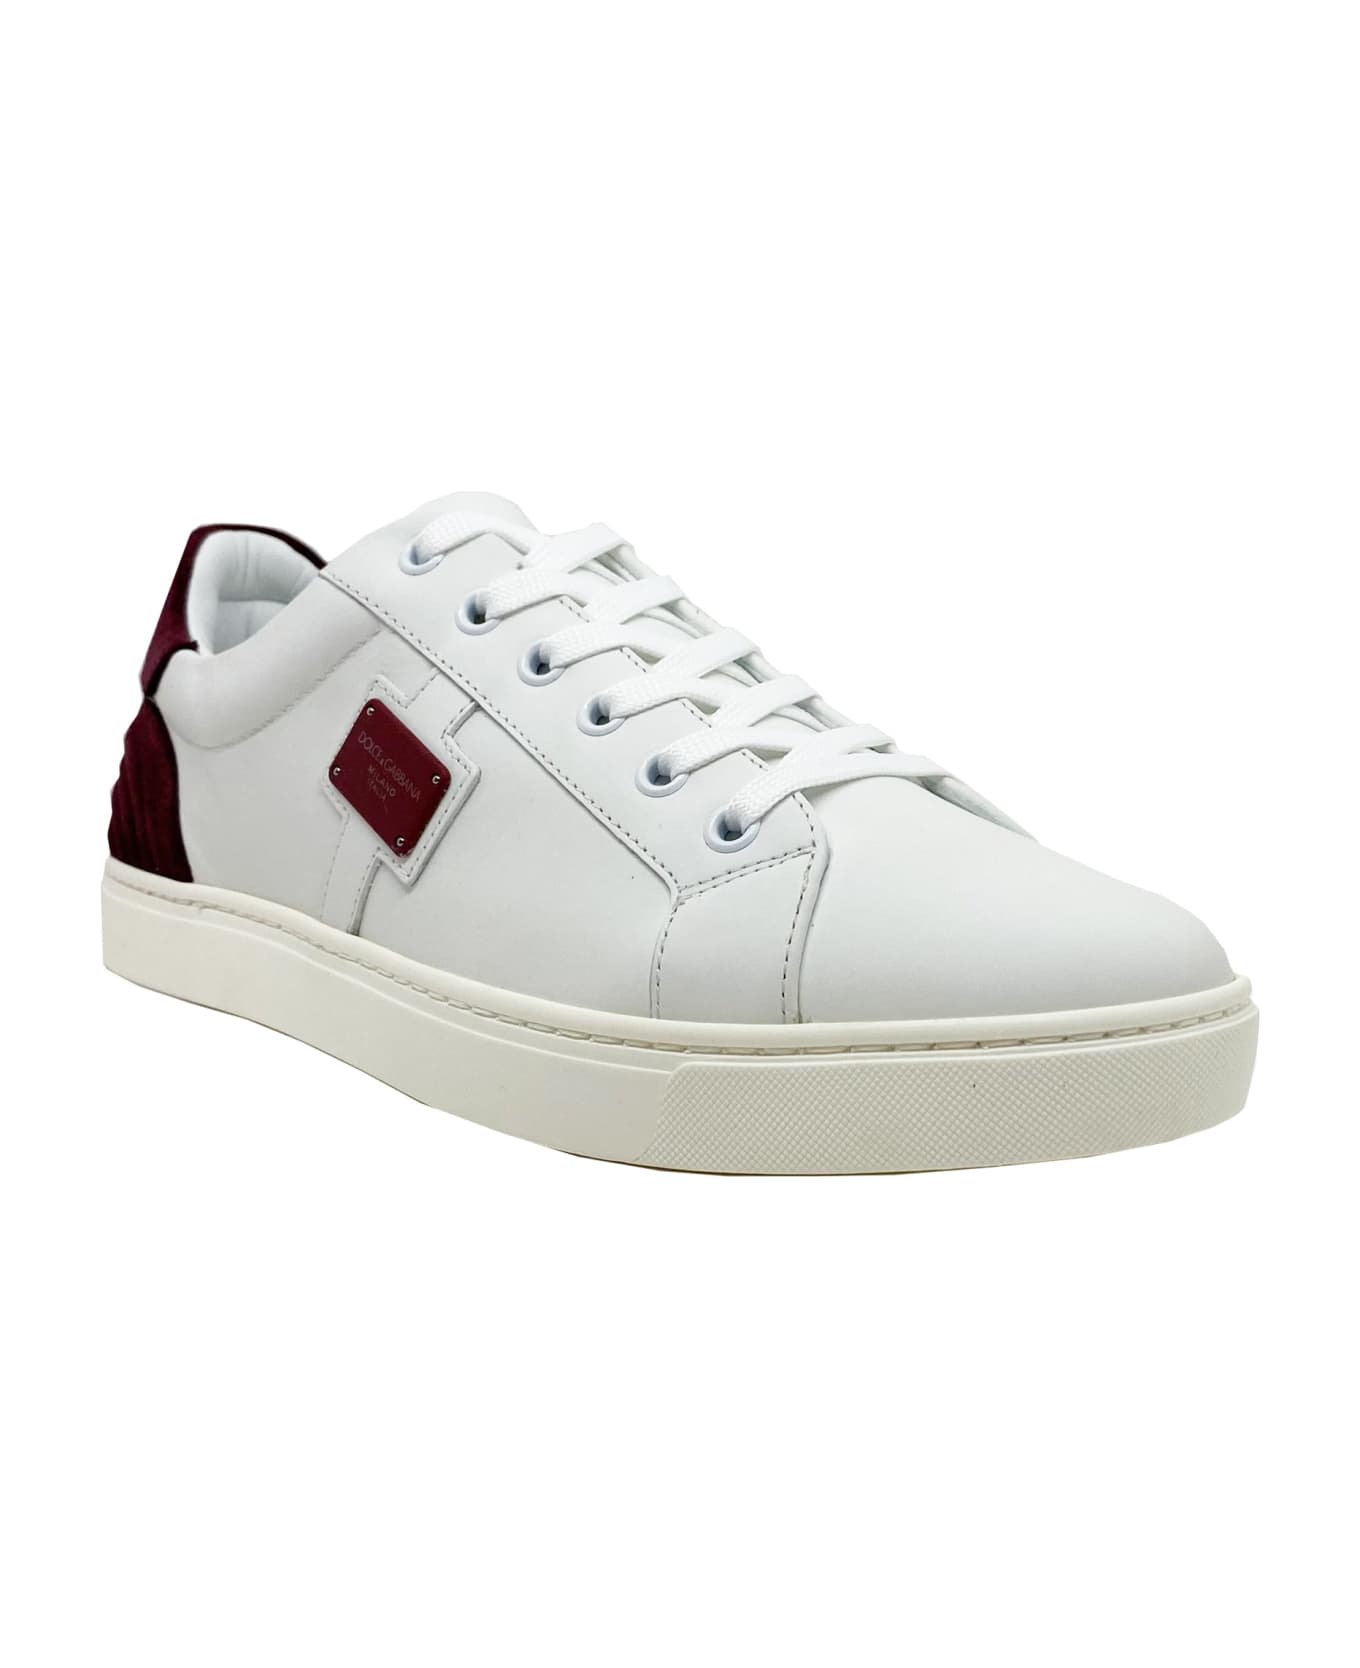 Dolce & Gabbana Logo Leather Sneakers - White スニーカー